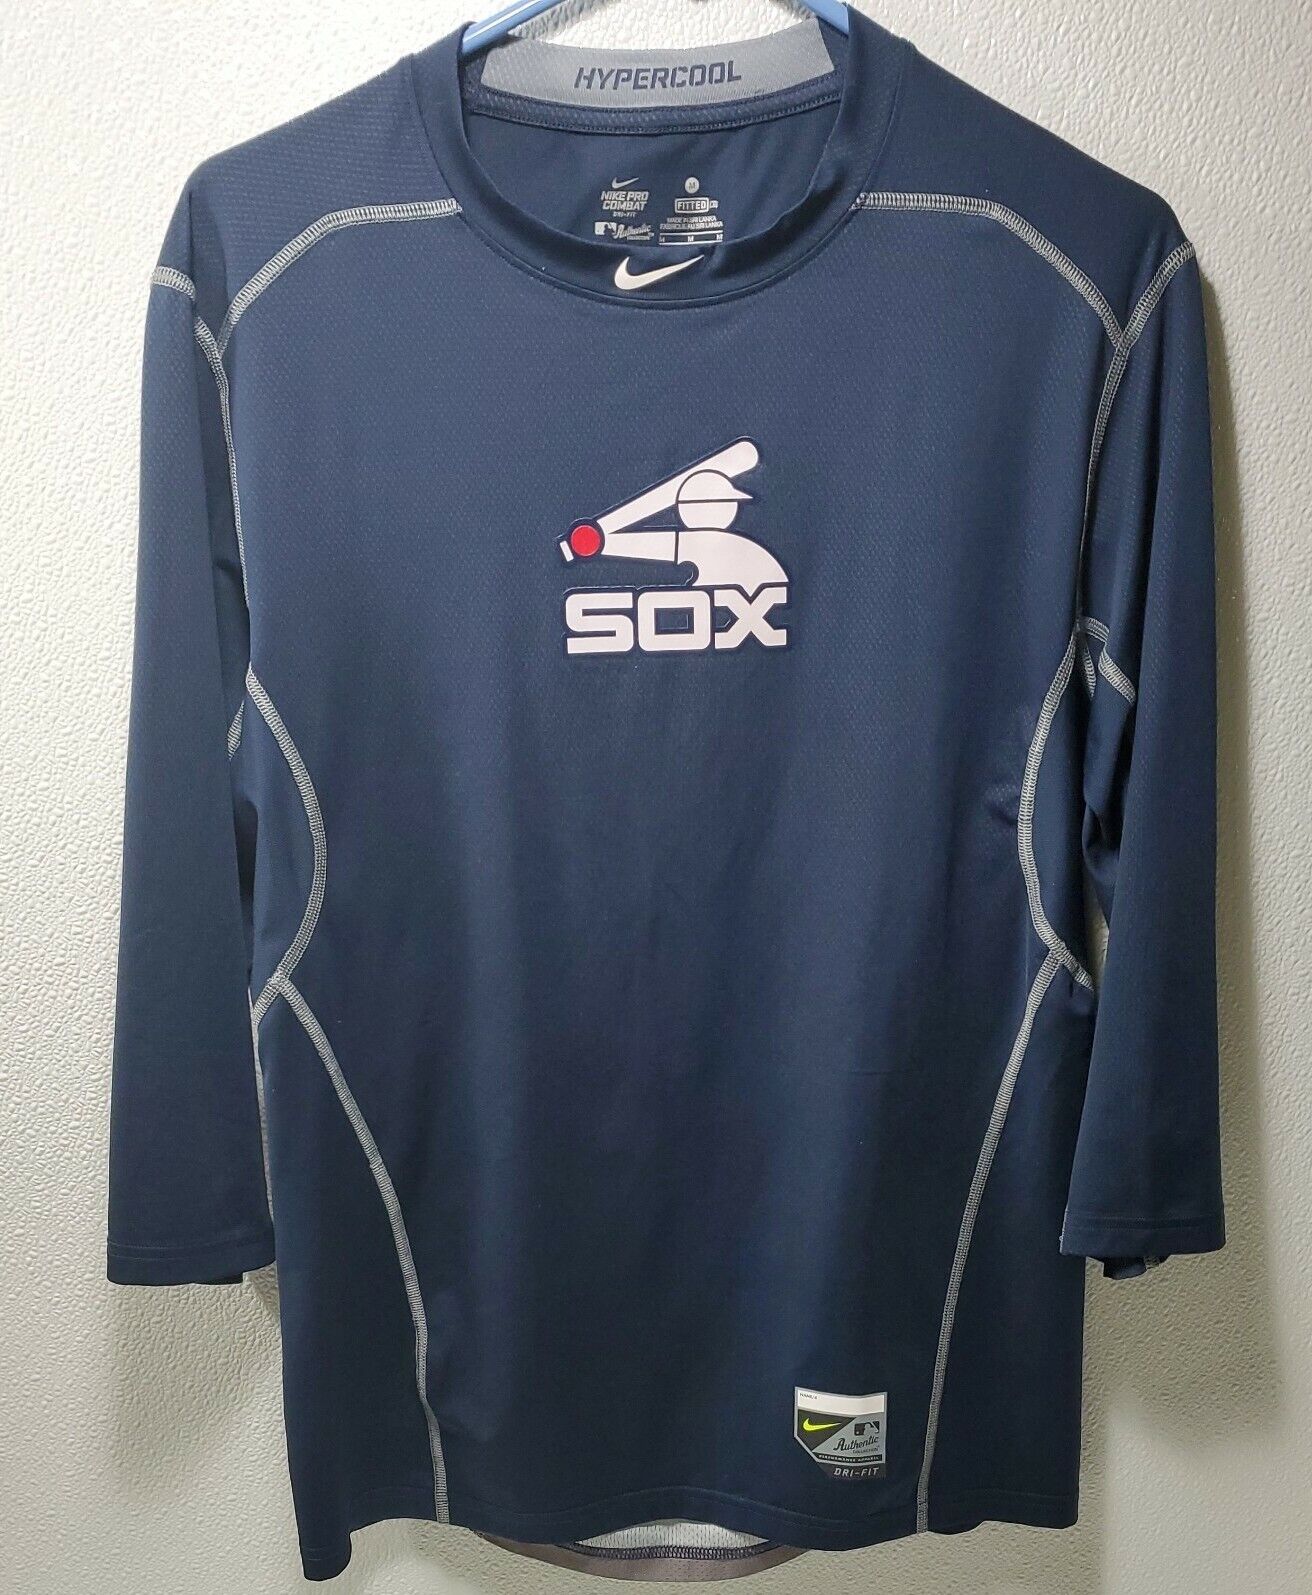 NIKE White Sox Pro Combat Hypercool Shirt Mens Sz M Compression Dri Fit Vented Sale - SimHQ.com